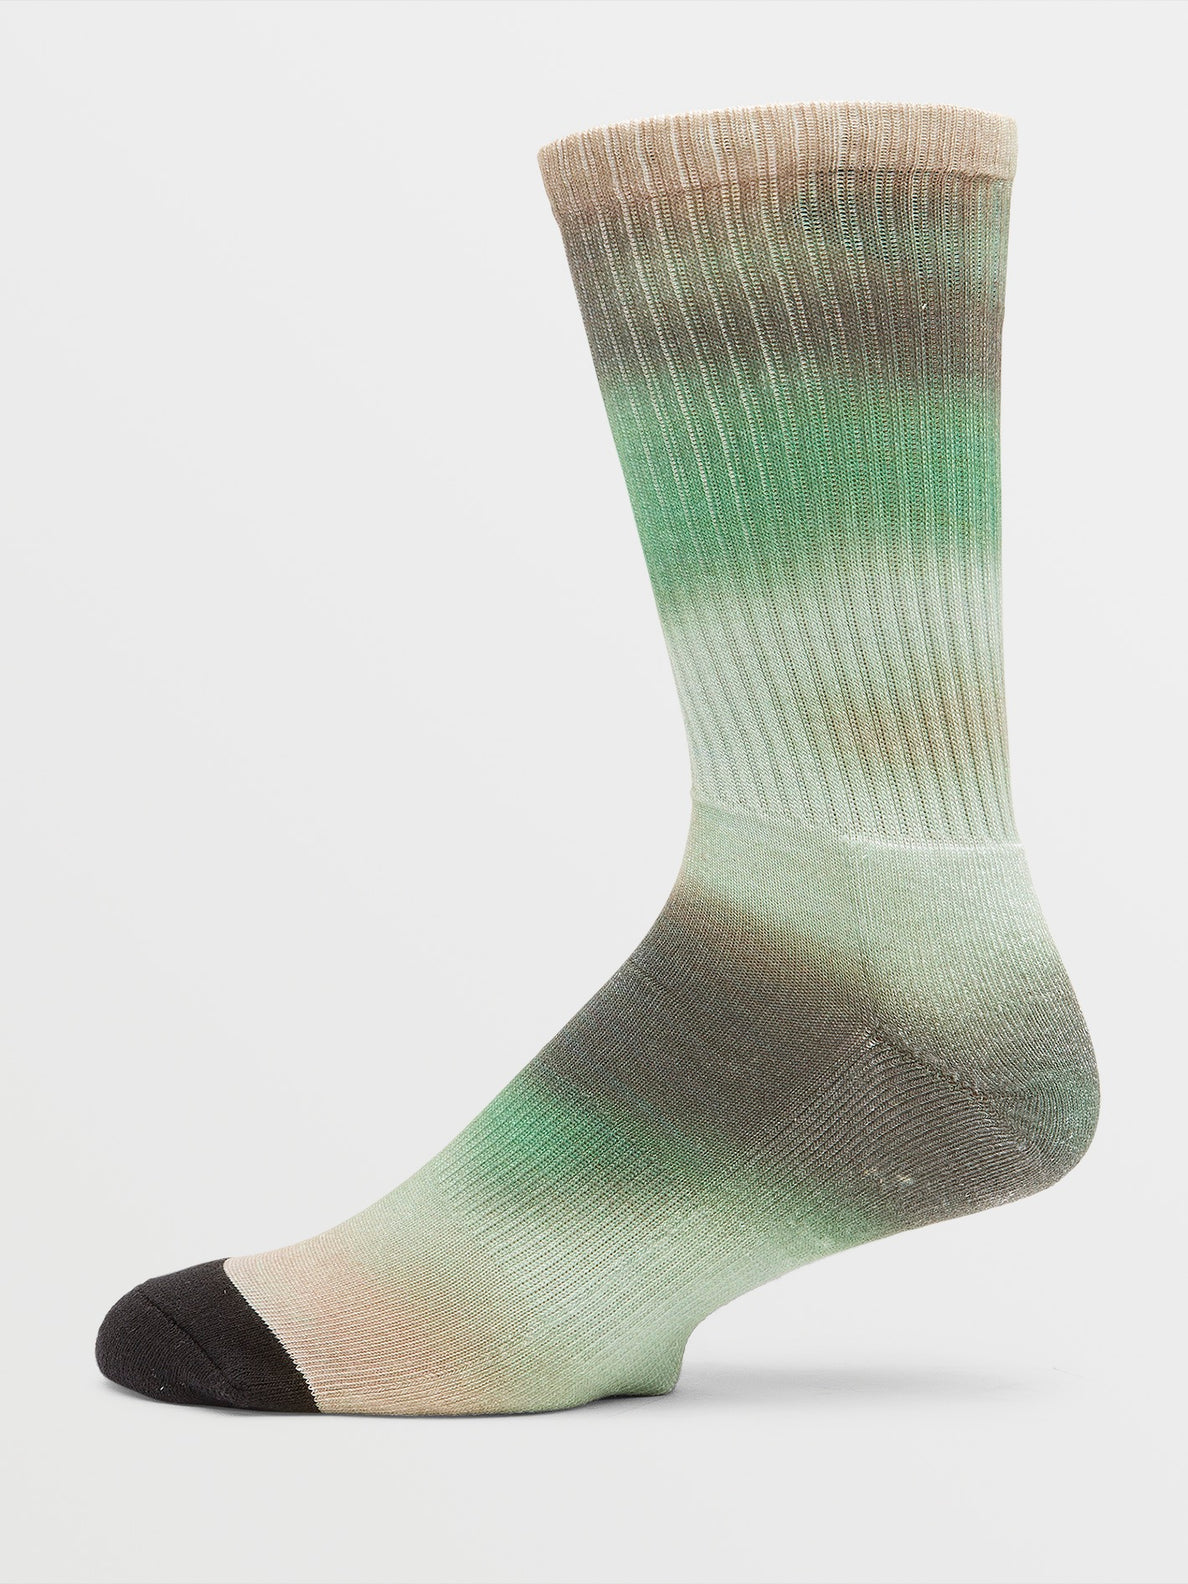 Over Print Socks - Camouflage